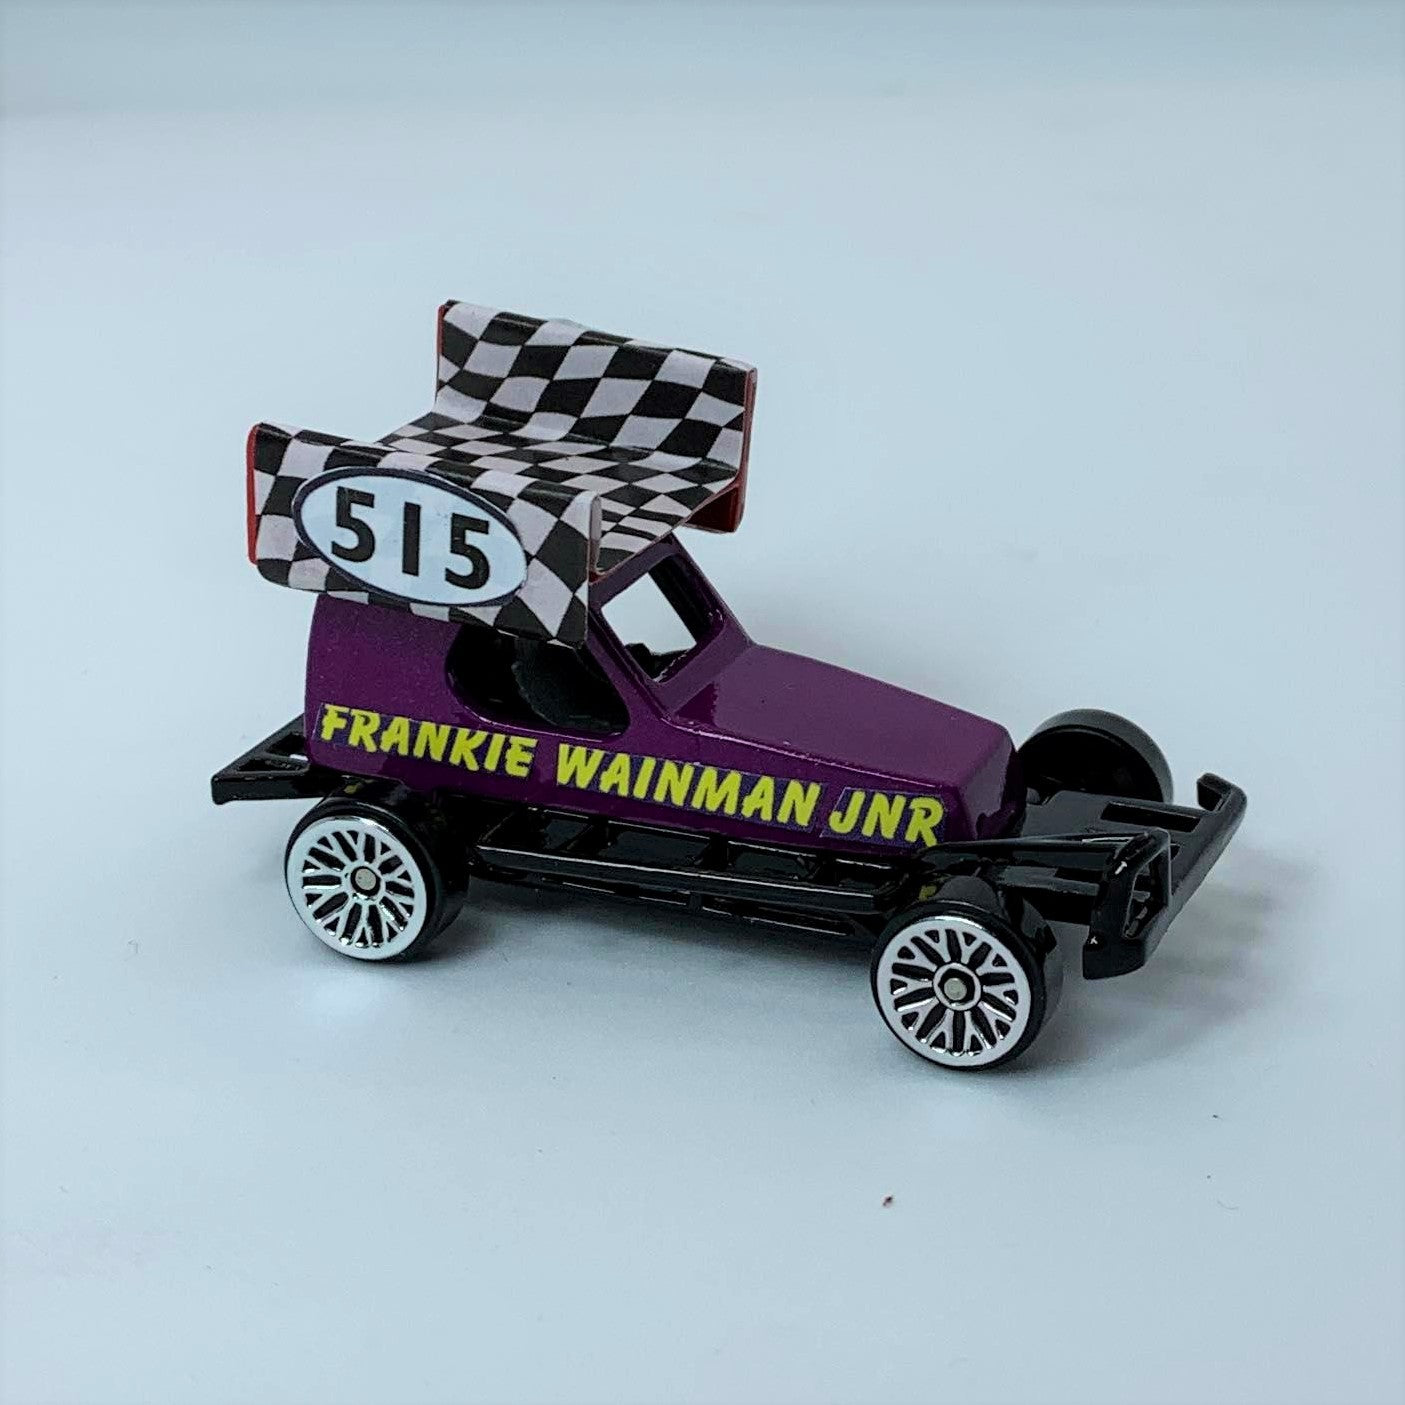 #515 Frankie Wainman Jnr - British Roof - Stock Car & Banger Toy Tracks